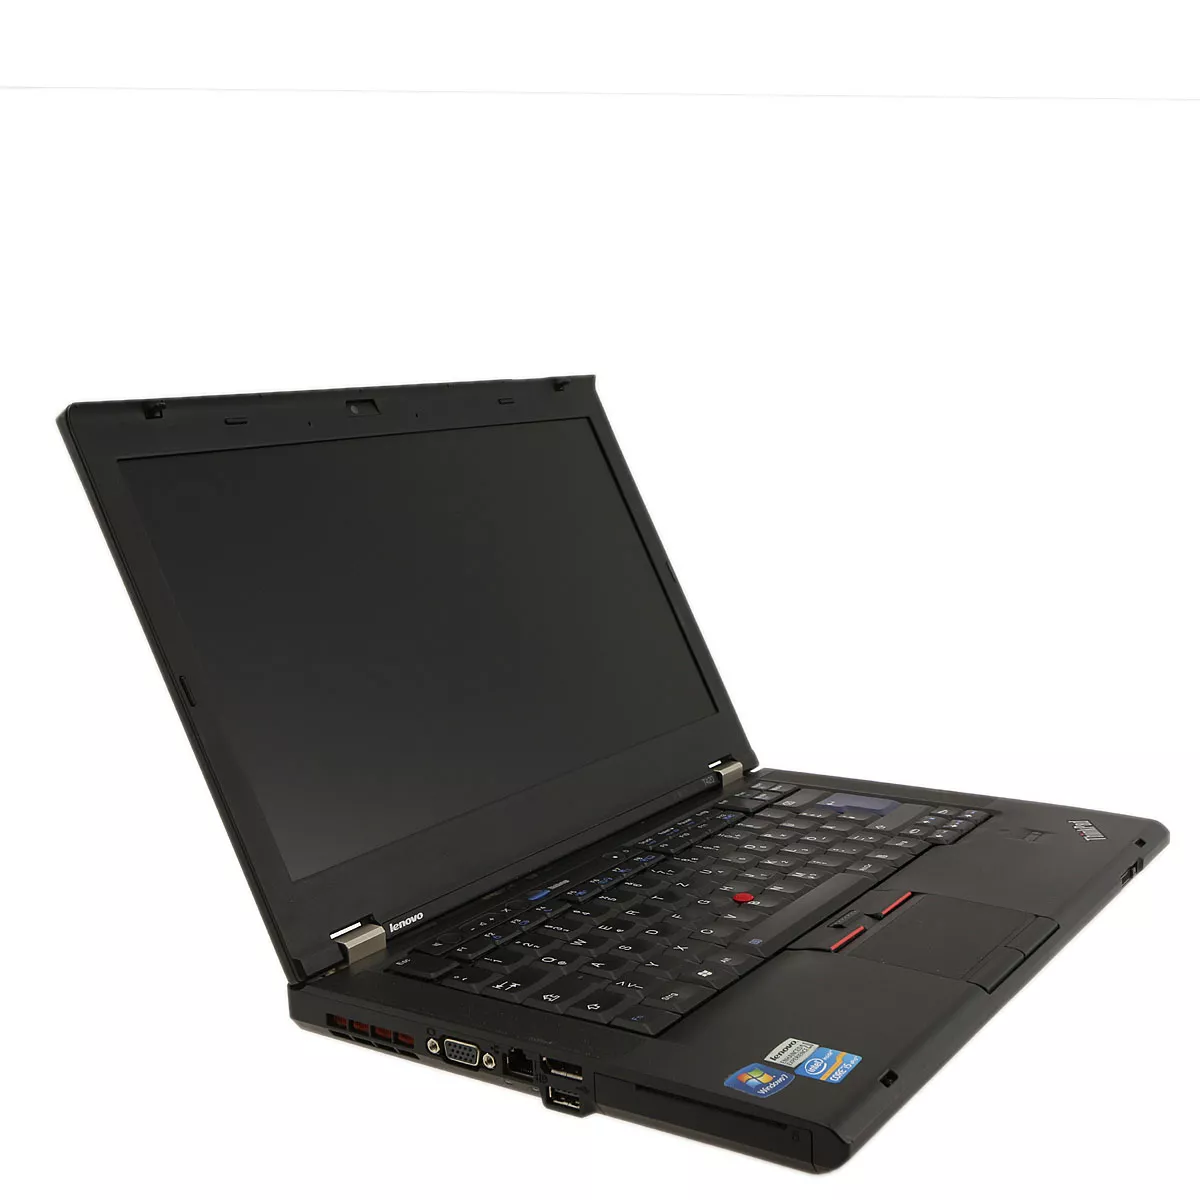 Lenovo ThinkPad T420 Core i5 2520M 2,5 GHz